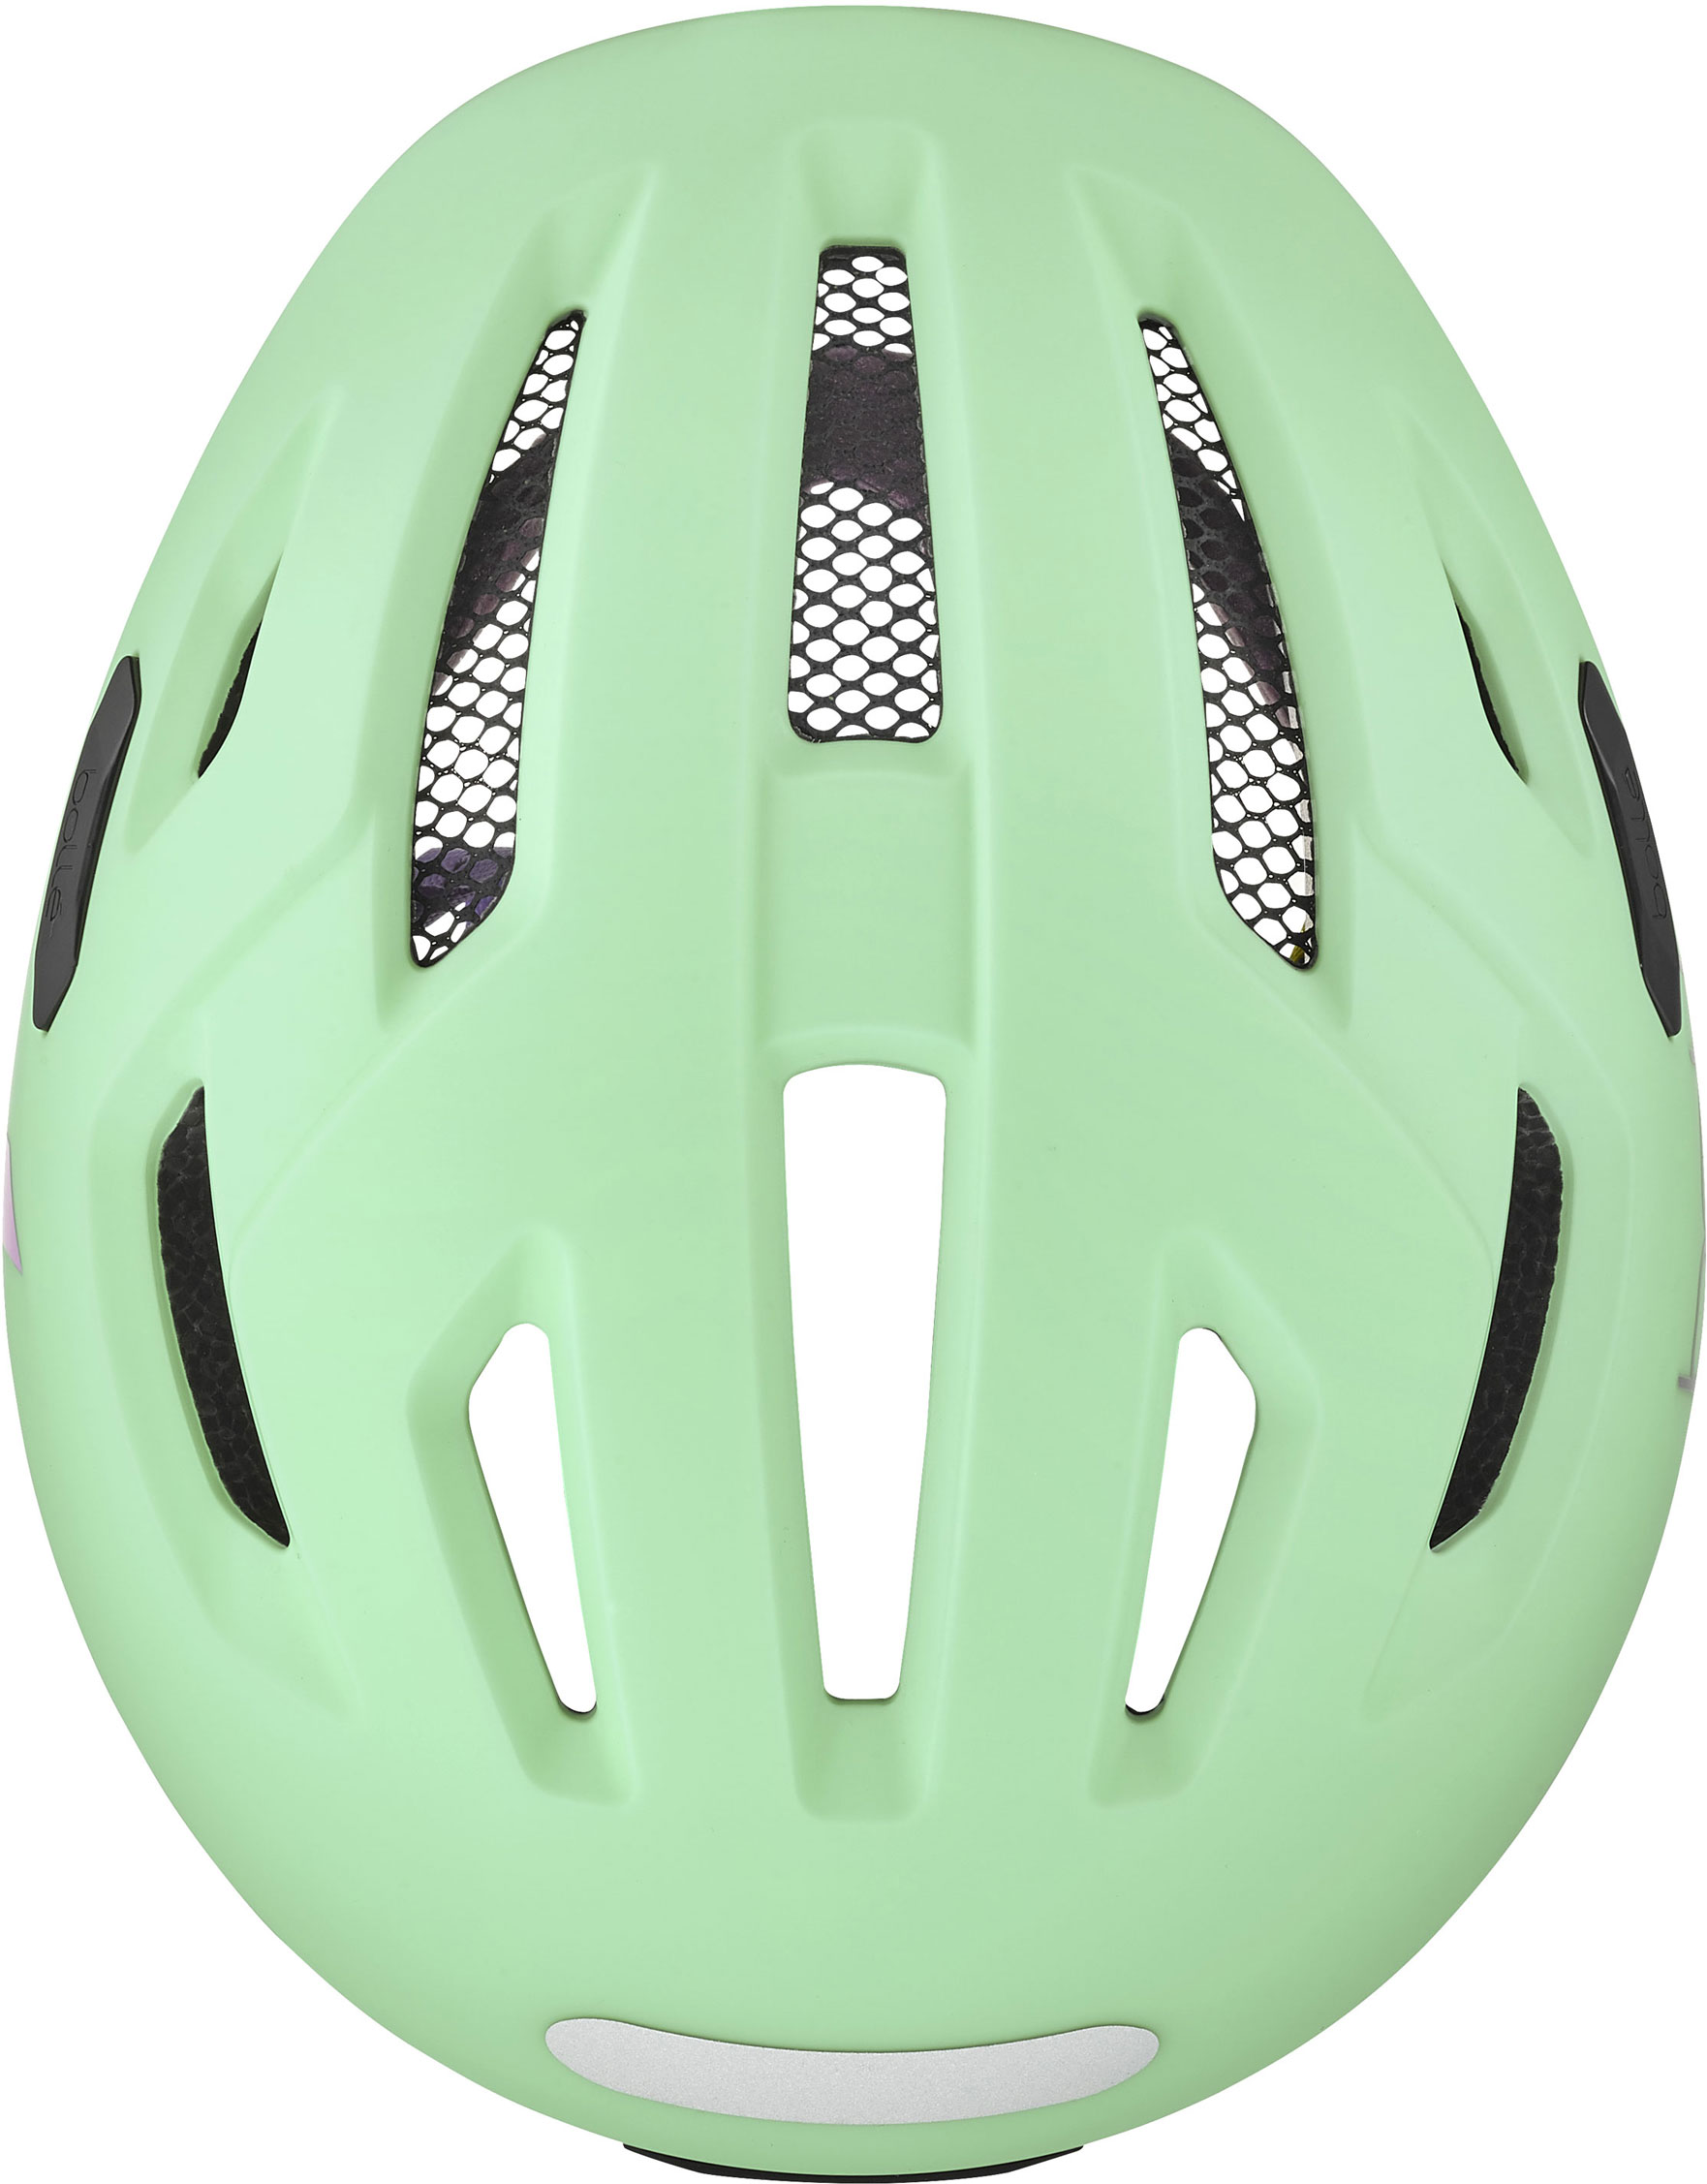 Juniors’ cycling helmet